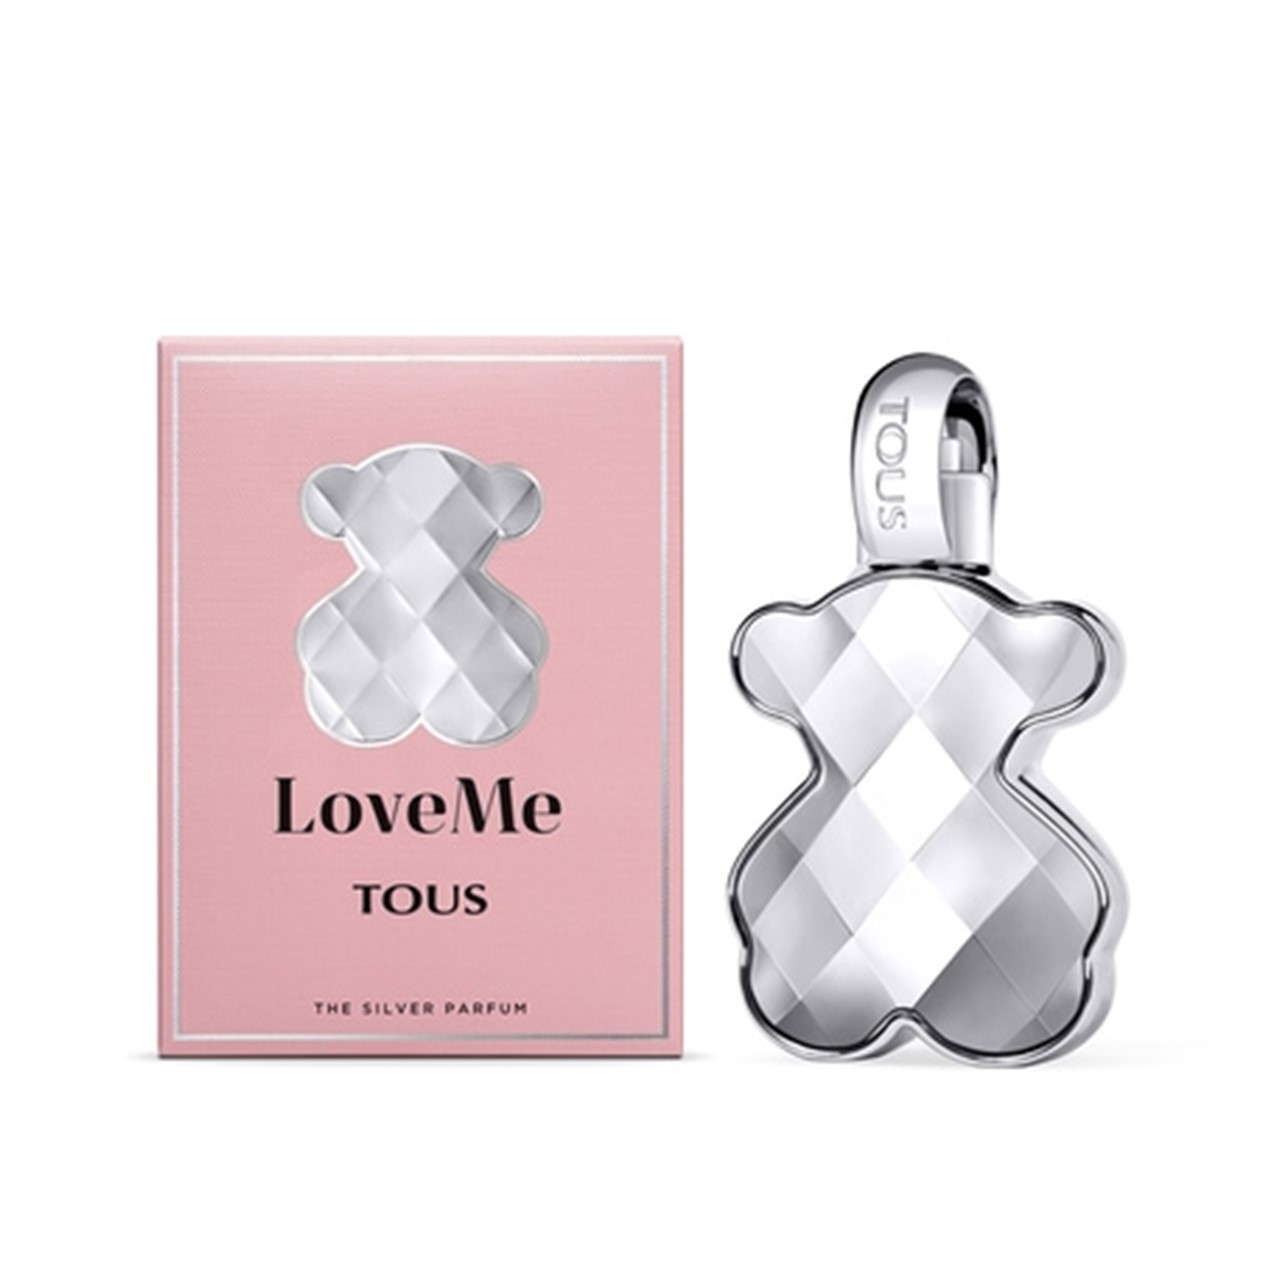 Tous LoveMe The Silver Parfum 50ml (1.7 fl oz)